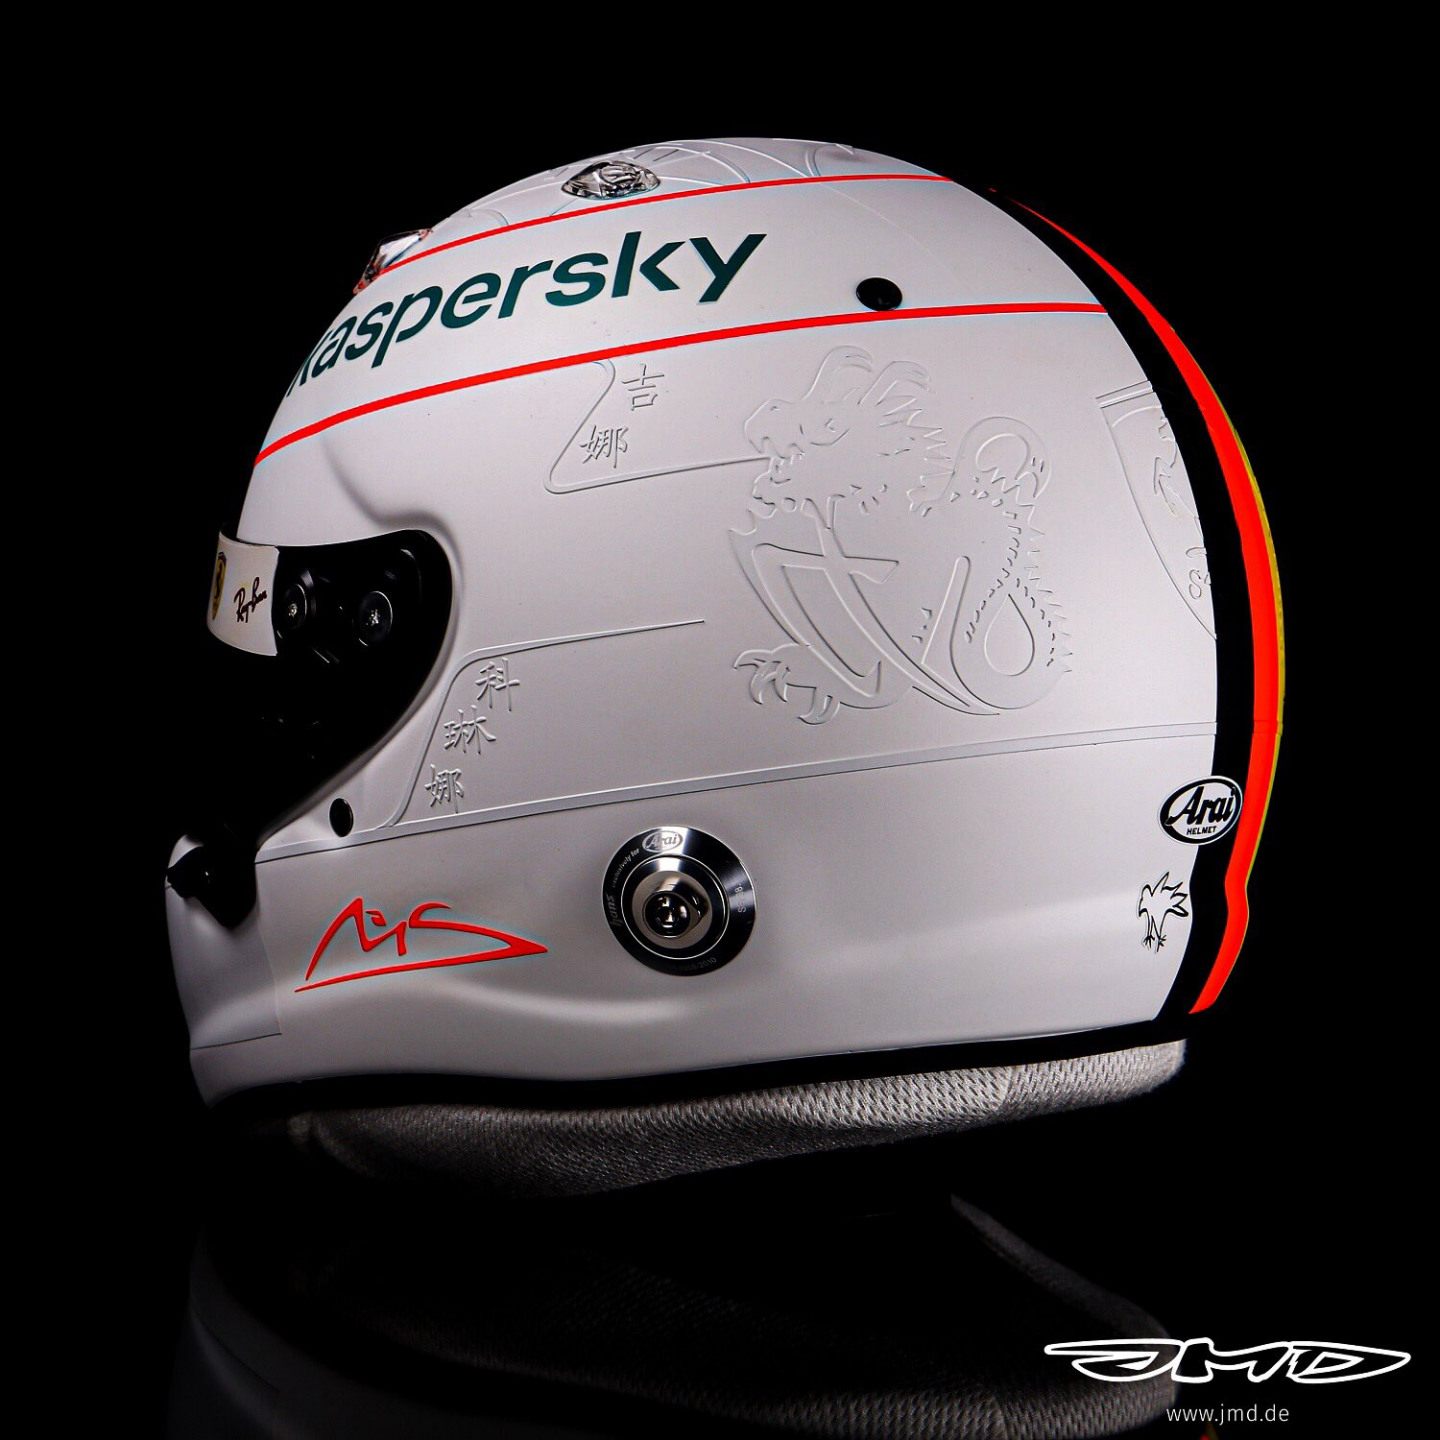 Шлем Себастьяна Феттеля на Гран При Айфеля © Jens Munser Designs